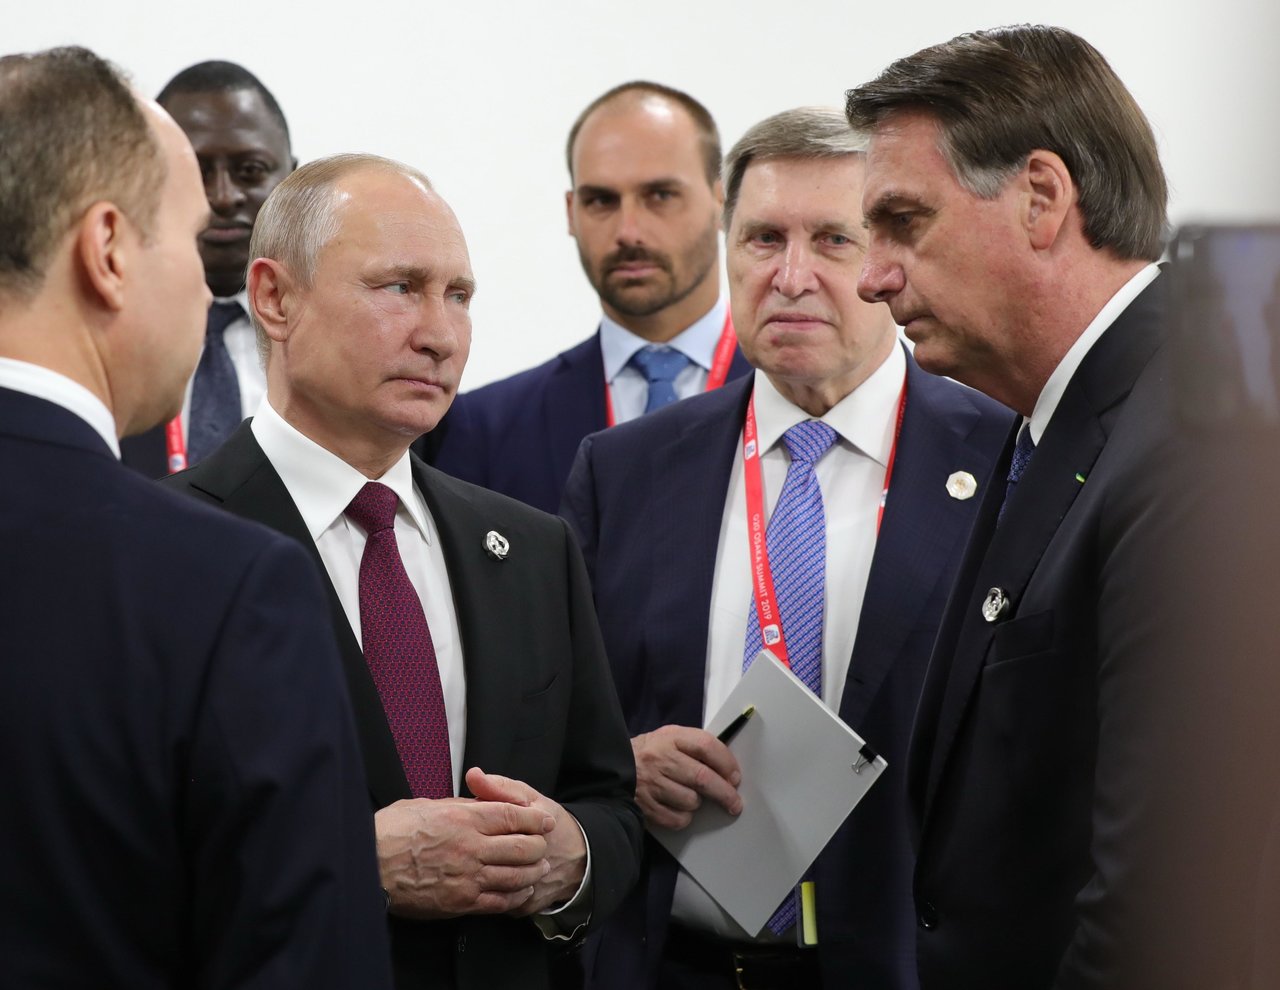 Bolsonaro ve en Putin a un aliado para solventar crisis venezolana